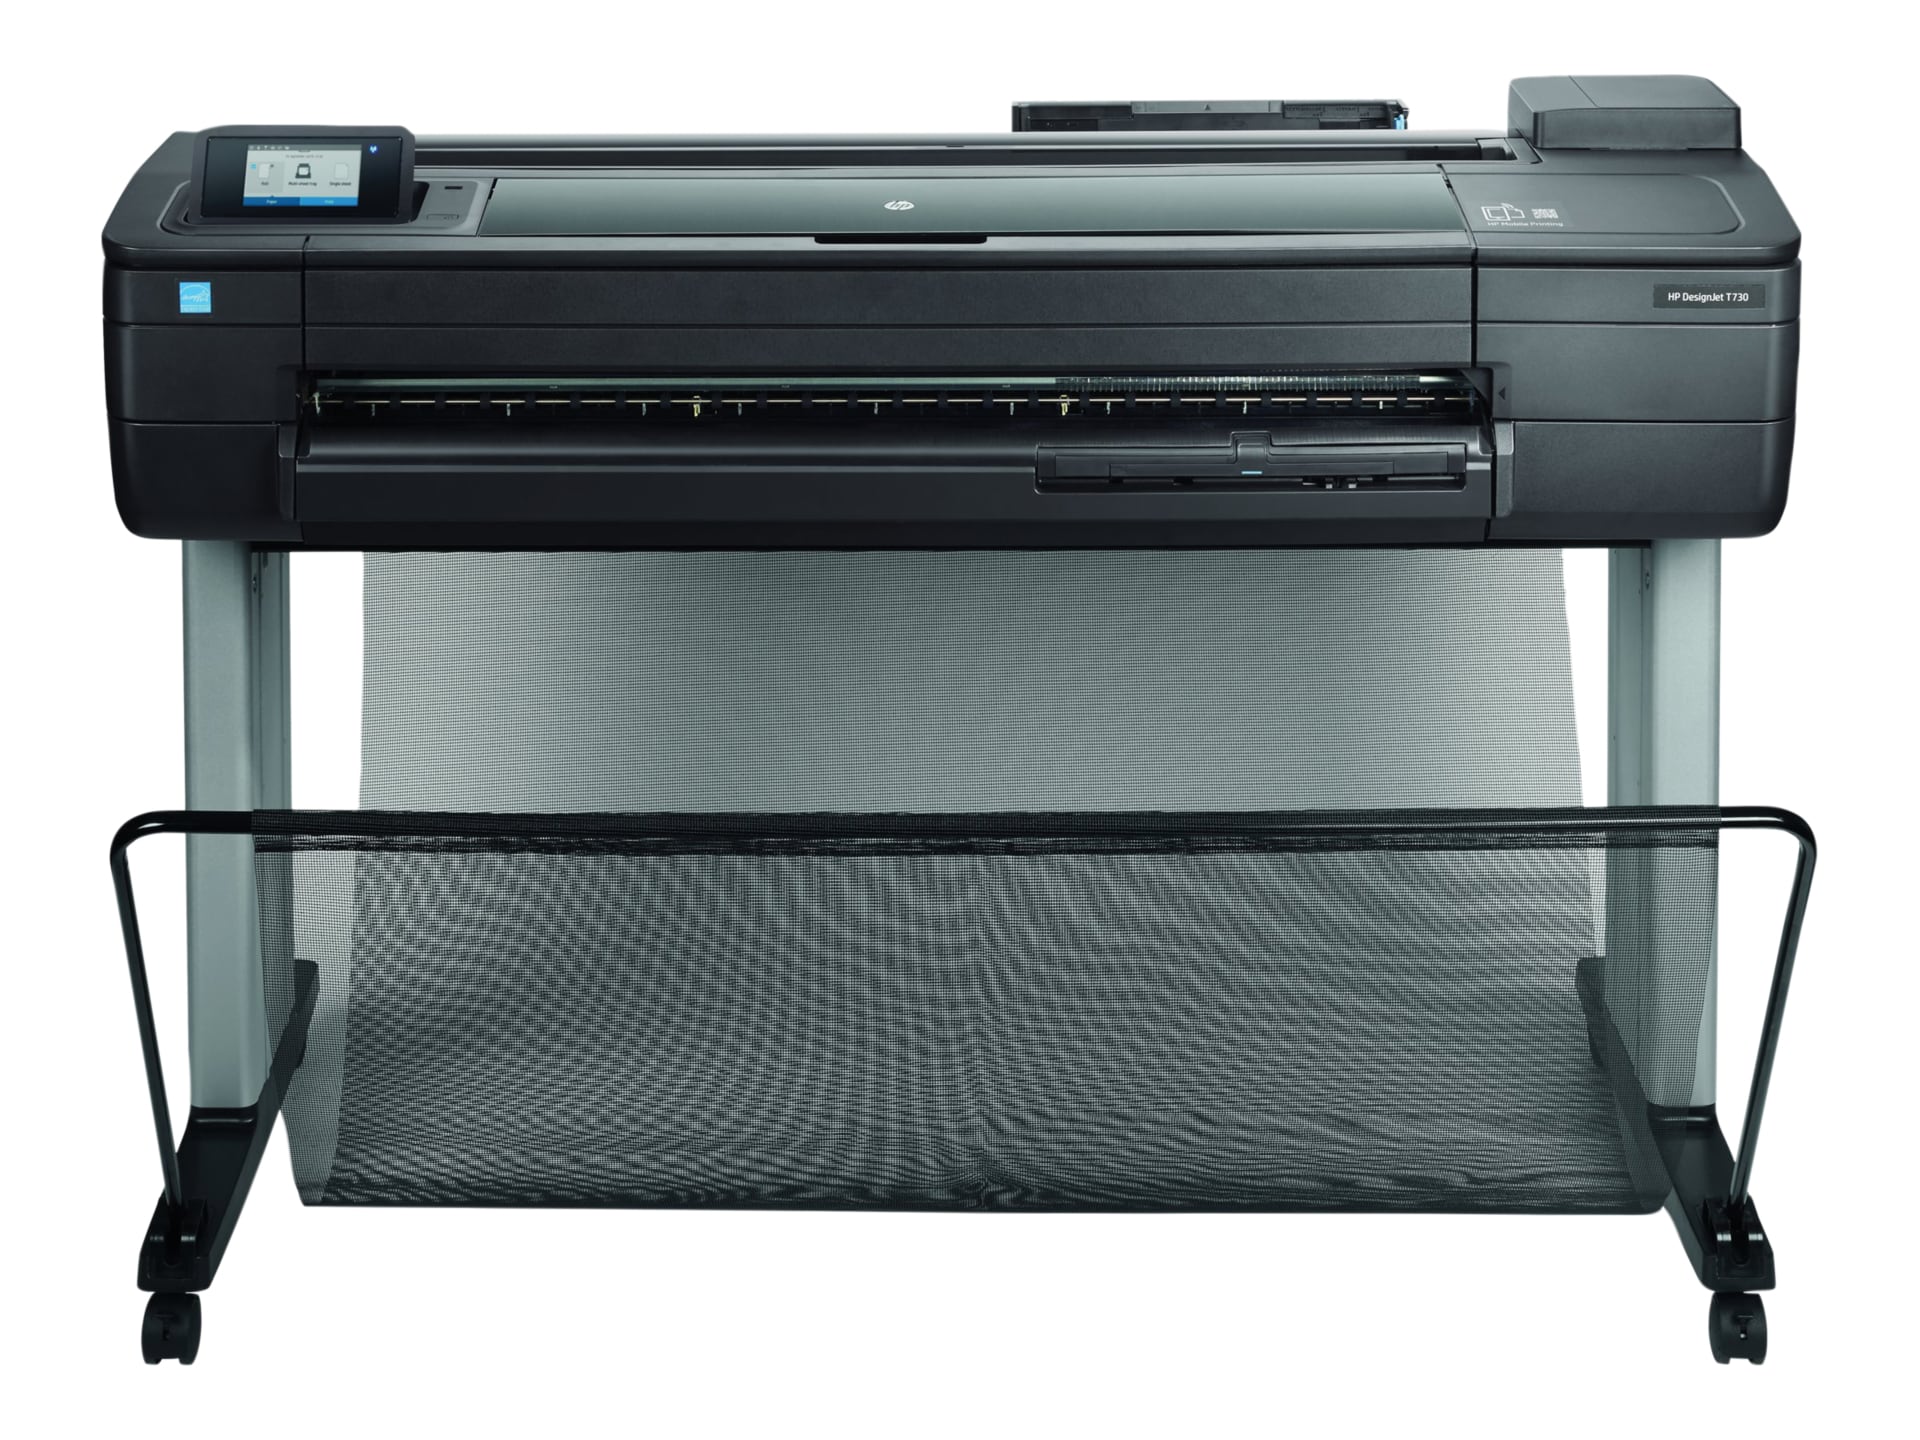 HP DesignJet T730 - large-format printer - ink-jet - F9A29D#B1K - Large Format & Printers - CDW.com